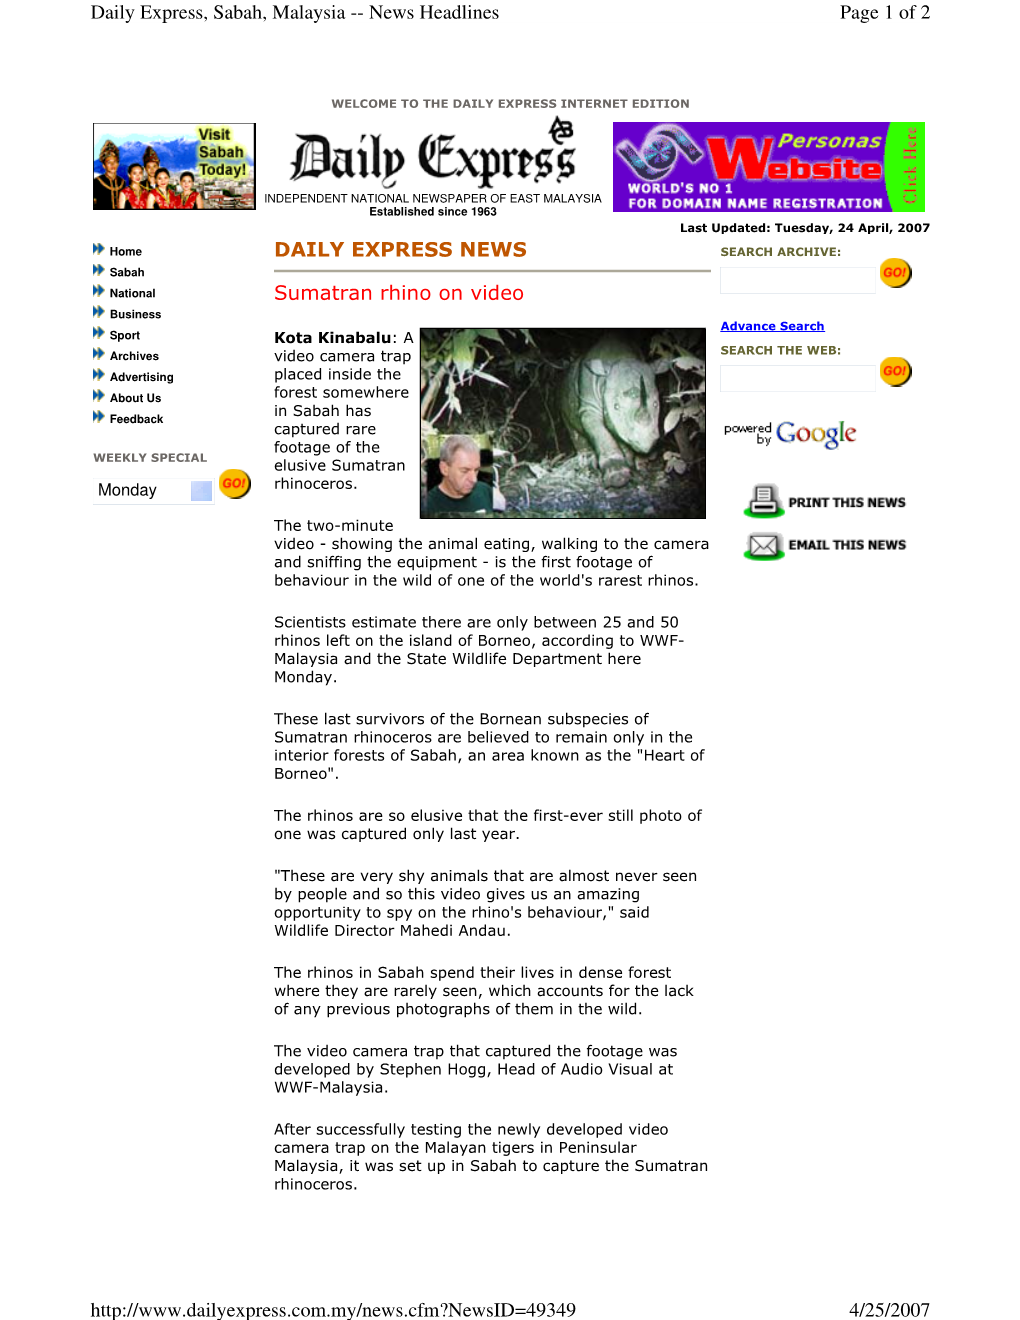 April 24, 2007, Daily Express, Sabah, Malaysia, "Sumatran Rhino on Video"